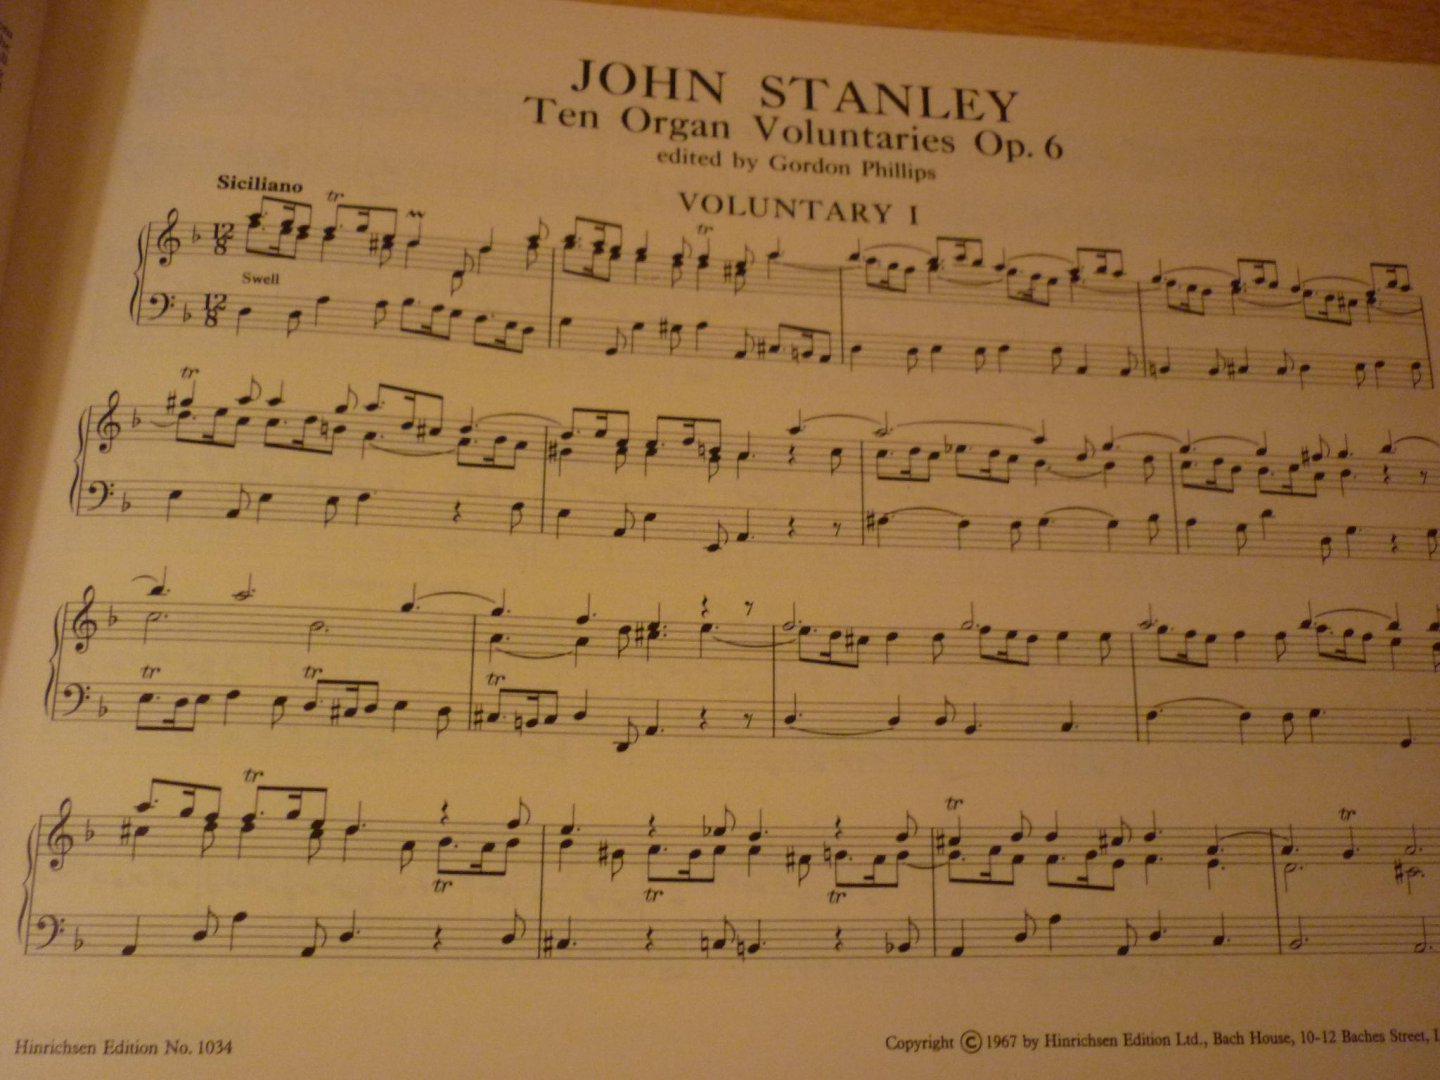 Stanley; John (1713 - 1786) - 10 Organ Voluntaries Op.6 (Tallis to Wesley; No. 28); Volume II: Ten Voluntaries Op. 6